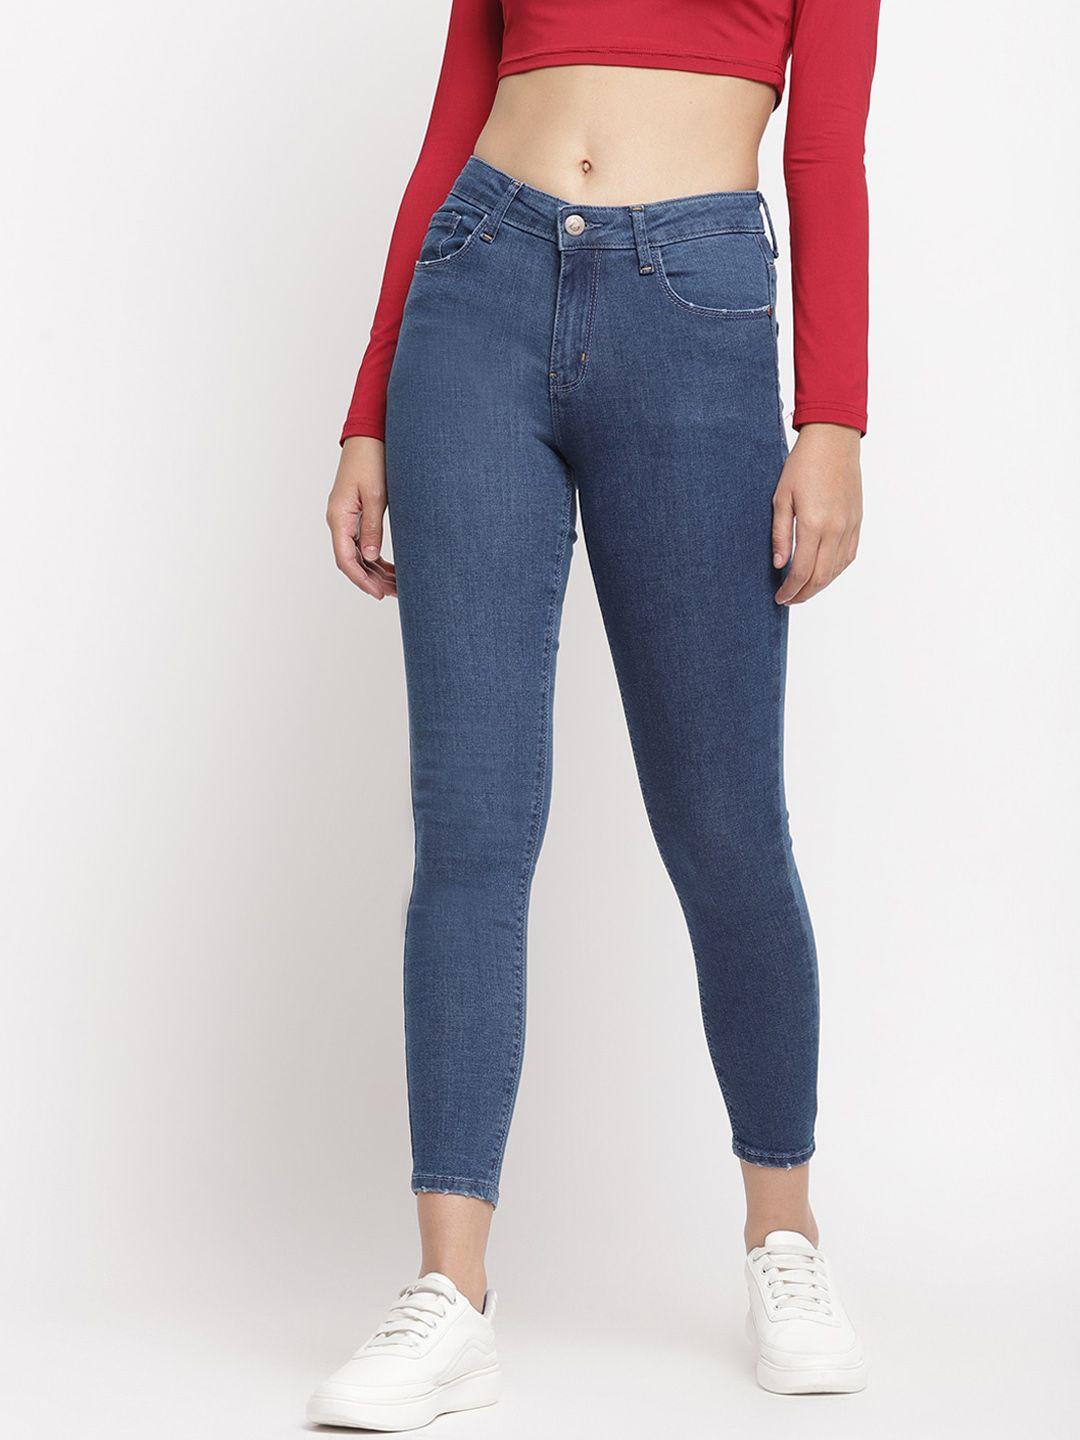 belliskey women blue super skinny fit mid-rise clean look jeans